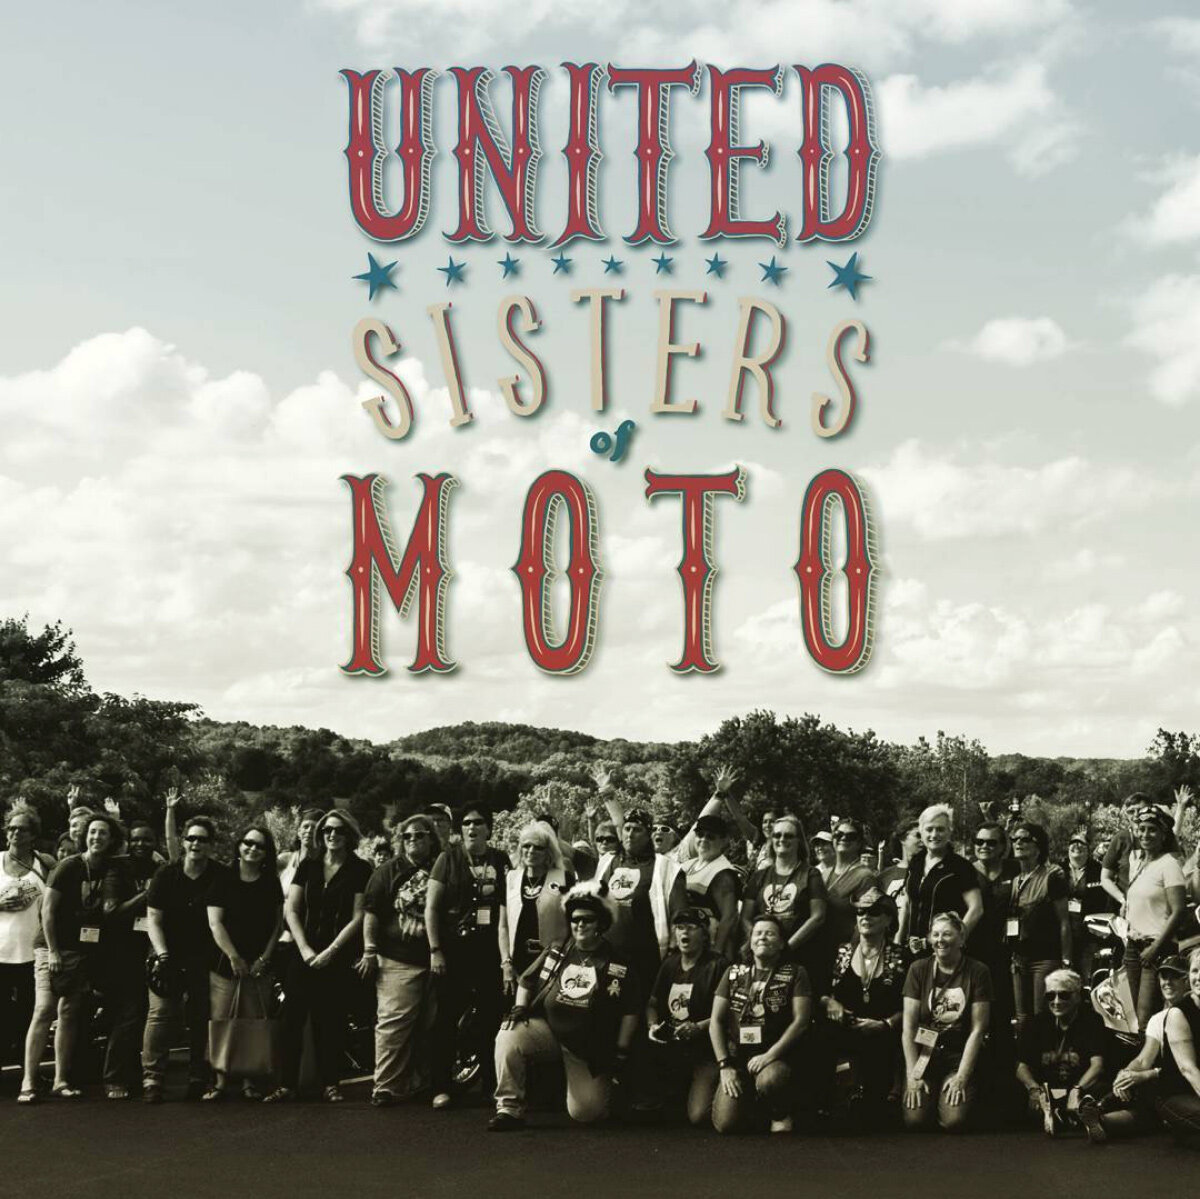 Mid-Atlantic Women's Motorcycle Rally 2018 Instagram Post 3